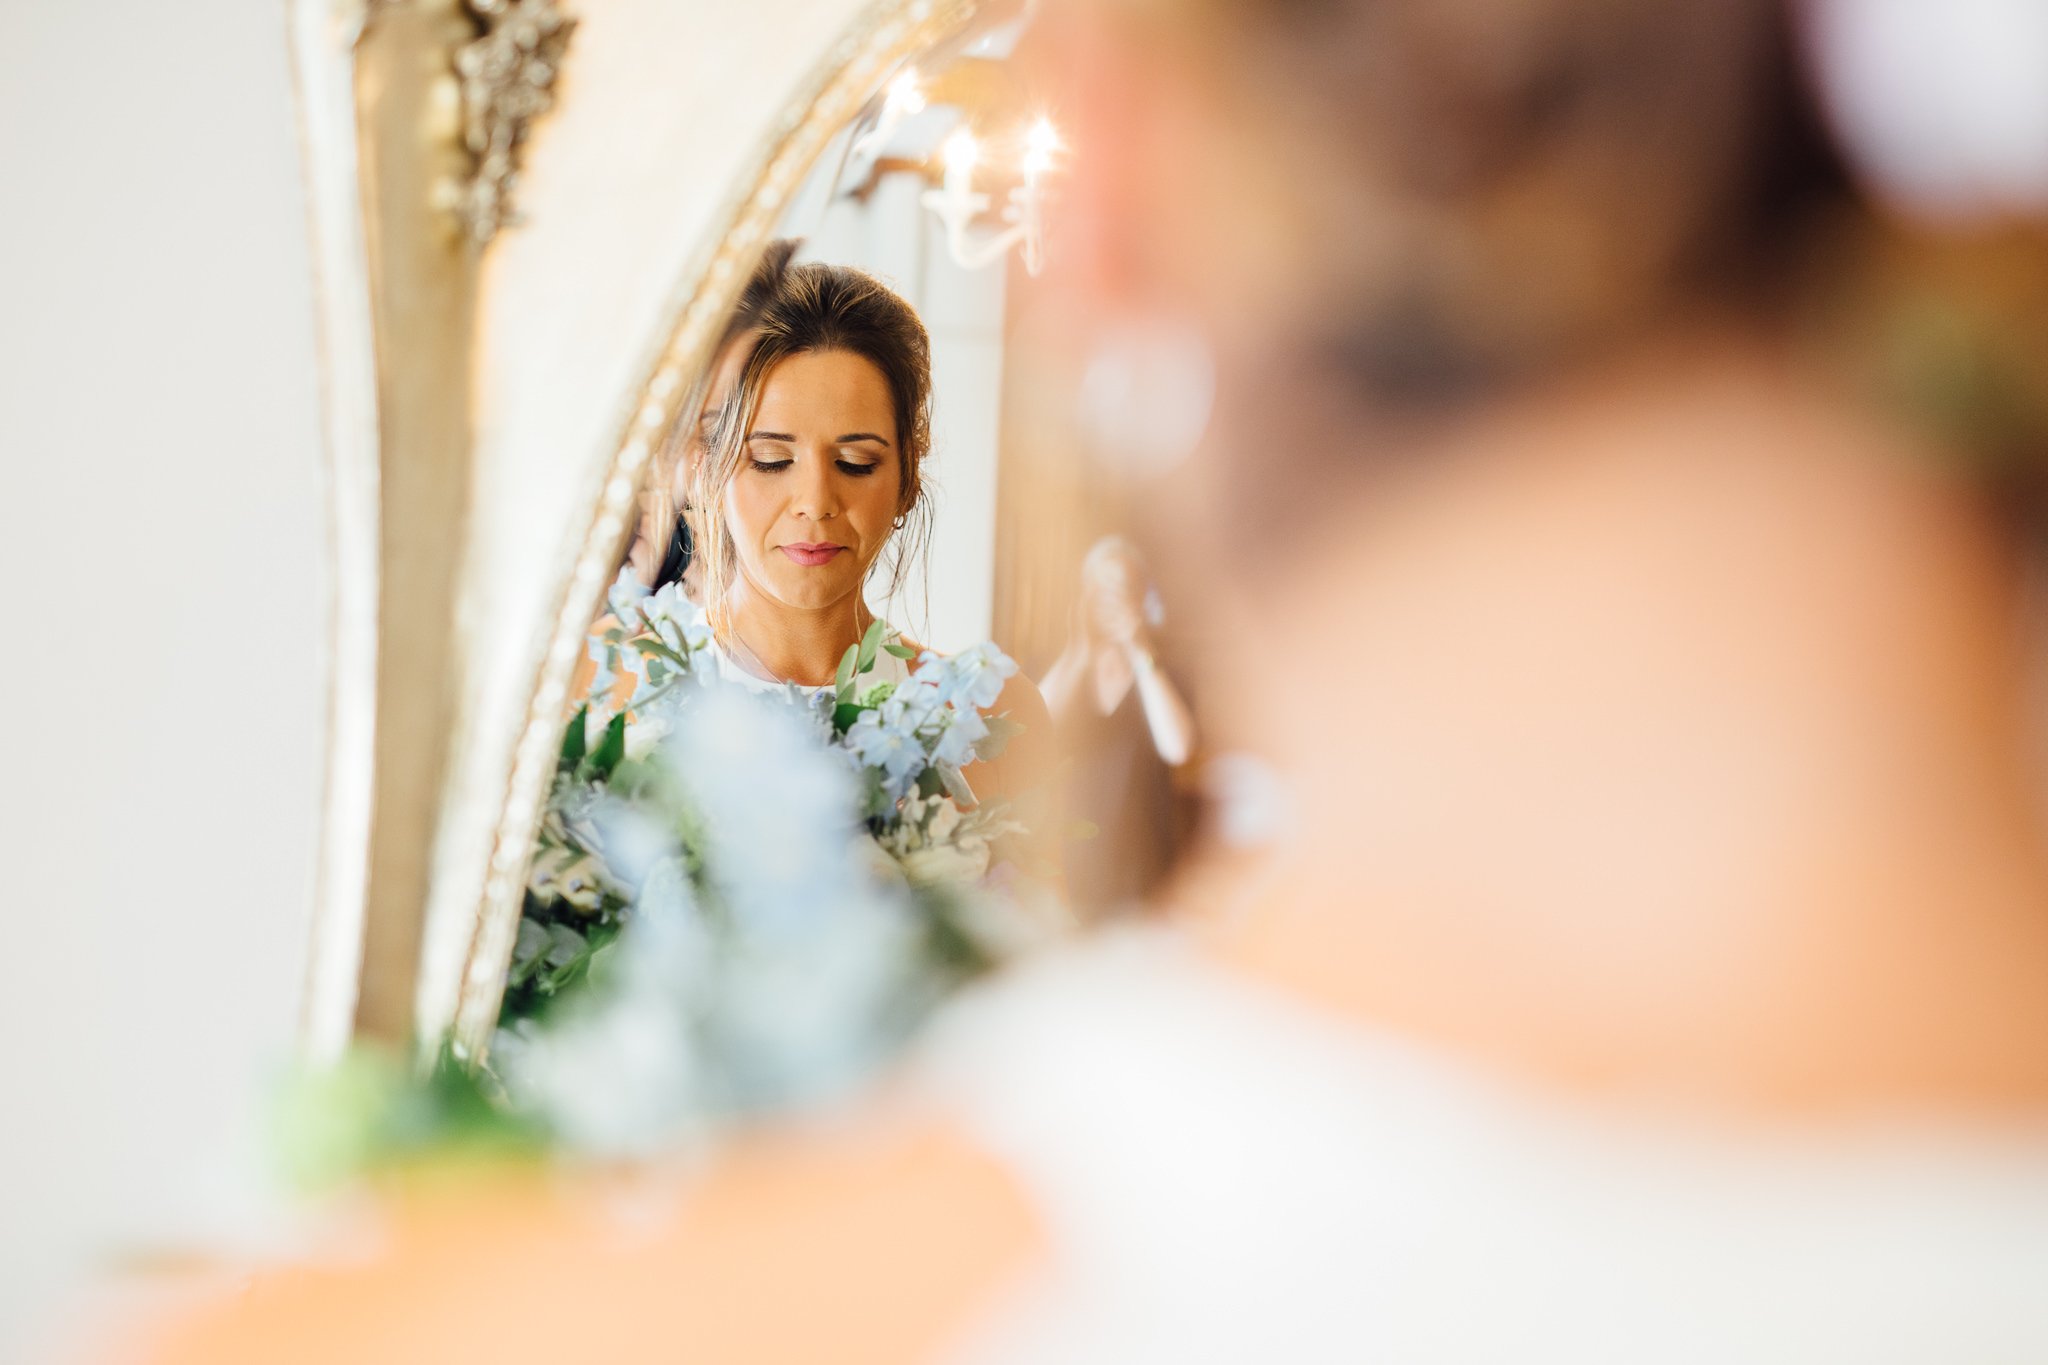  Reflection of bride in mirror 